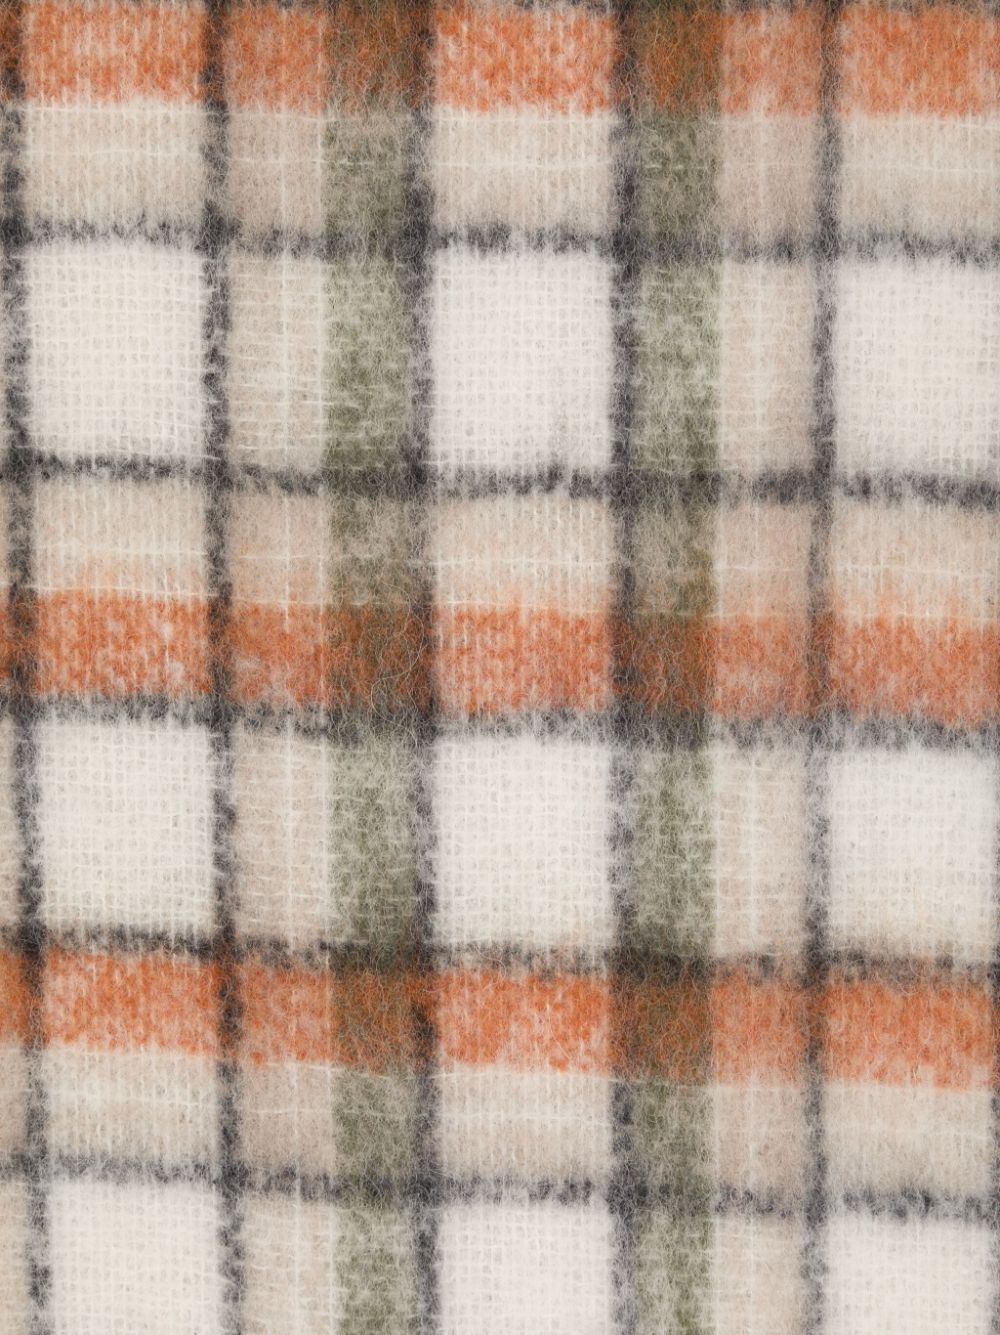 Séfr plaid check pattern scarf - Beige